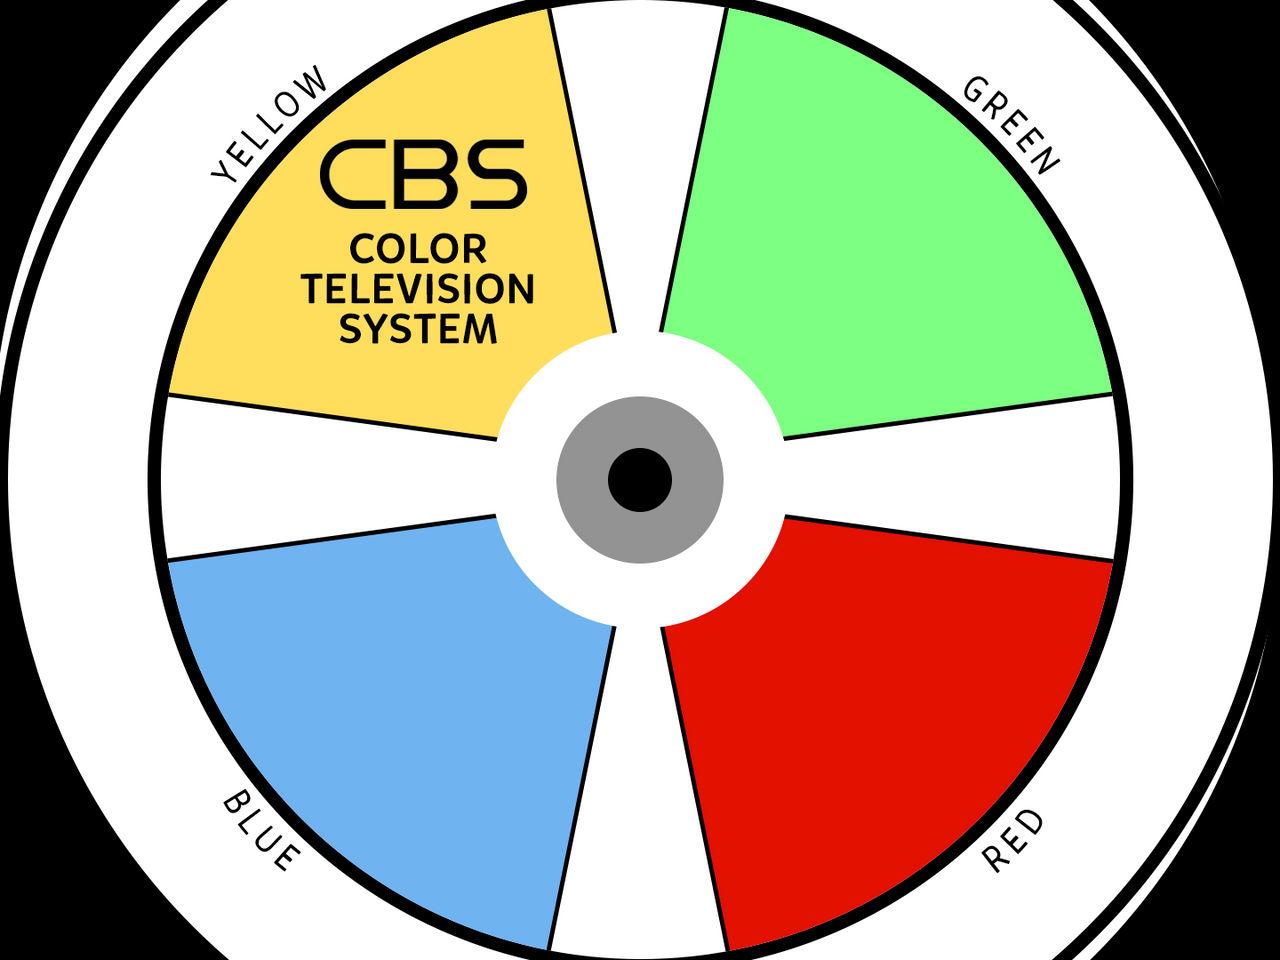 CBS Color Television System test pattern remake by UnitedWorldMedia on DeviantArt